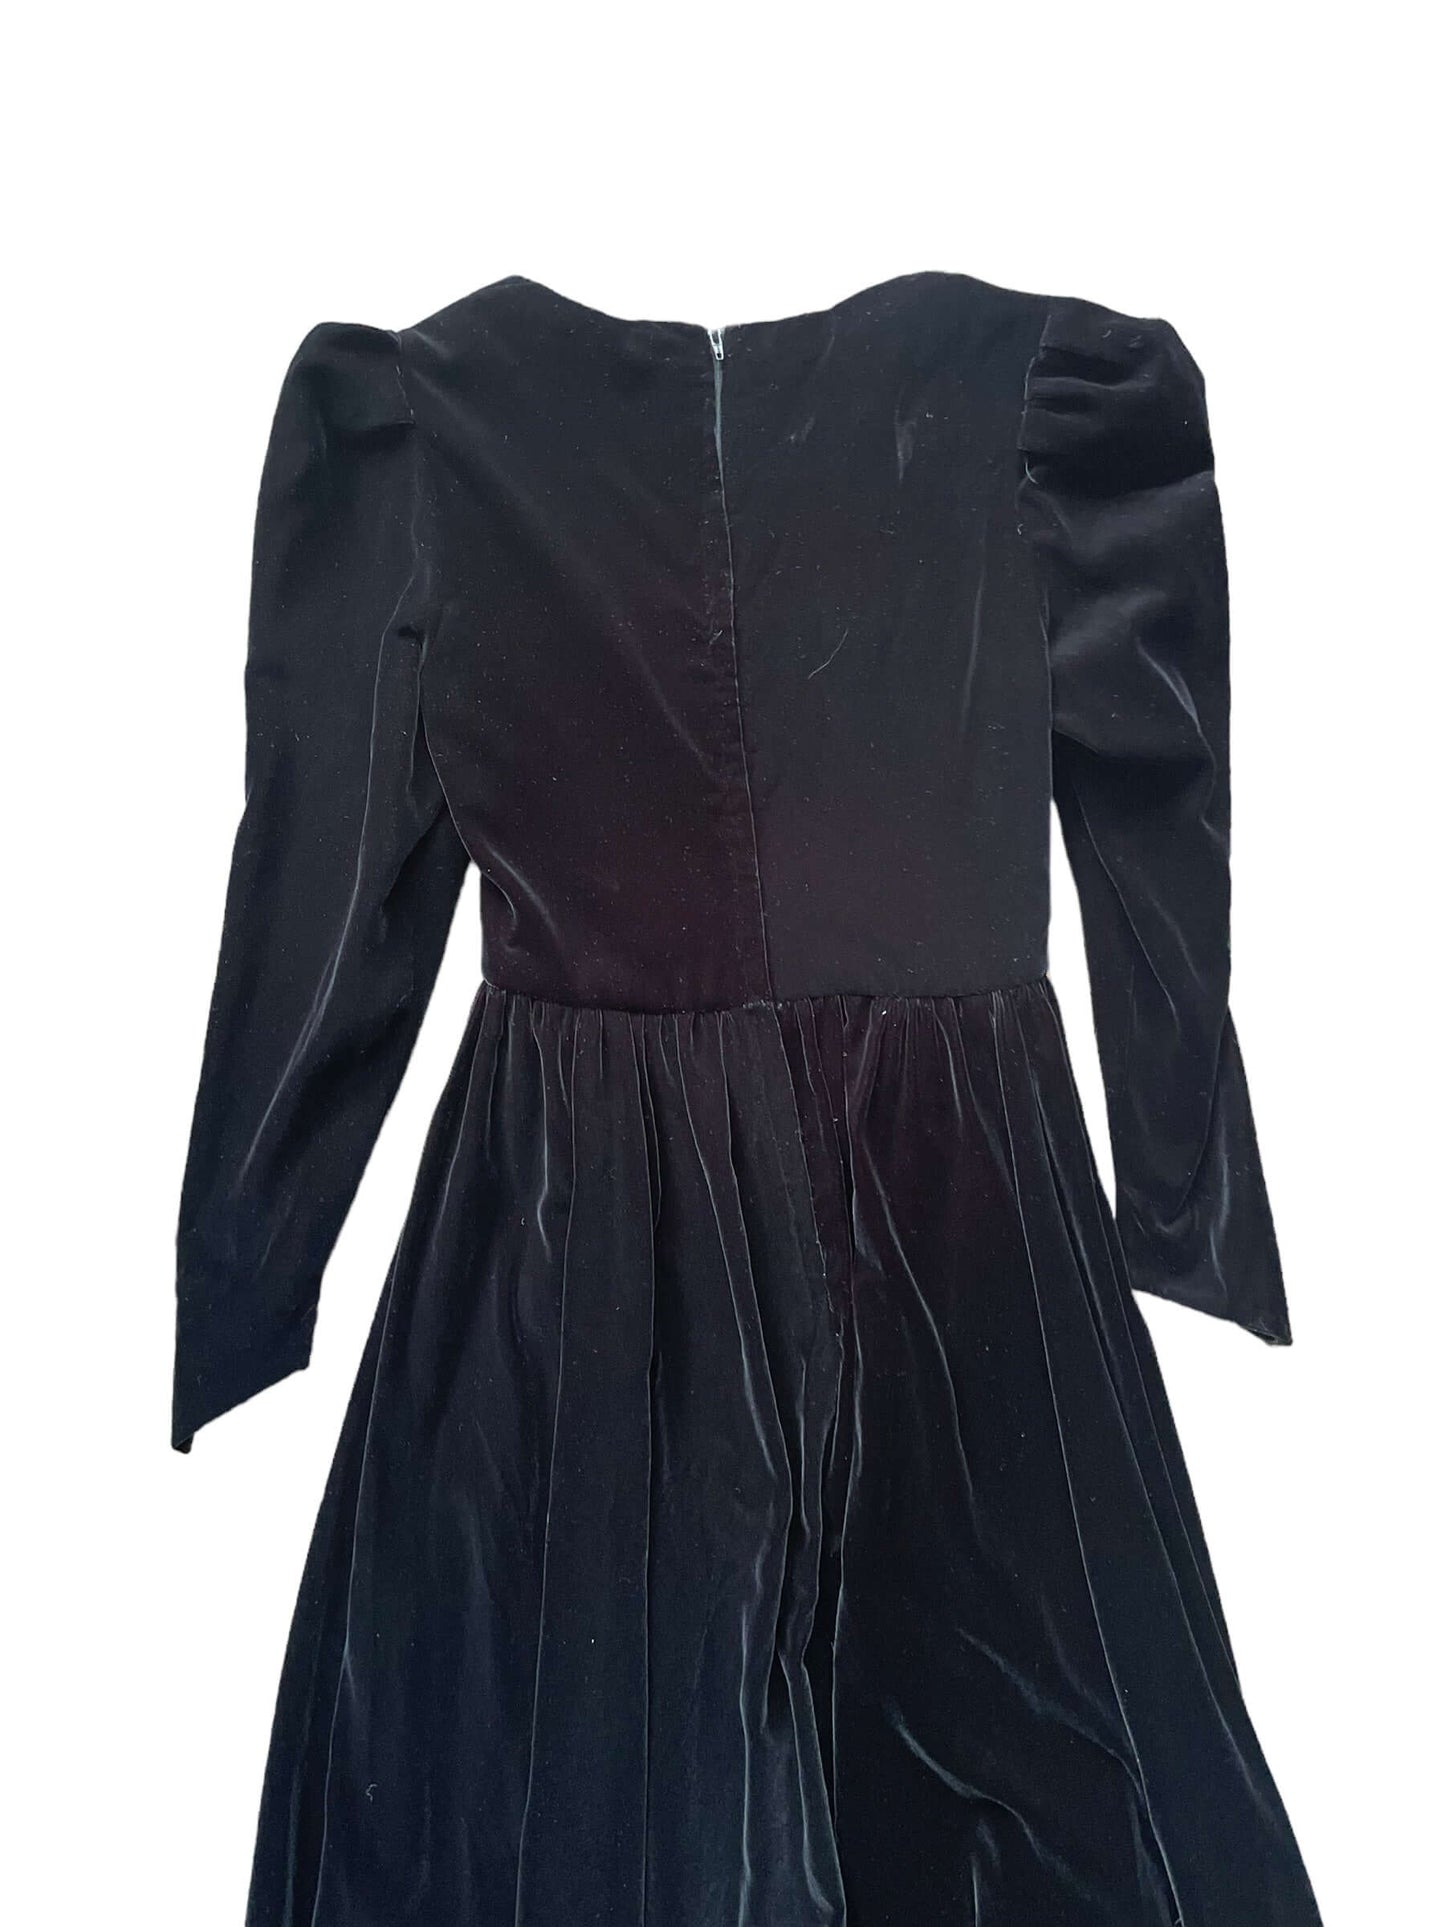 Vintage 1970s Black Velvet Dress |  Barn Owl Vintage Dresses | Seattle Vintage Ladies Clothing